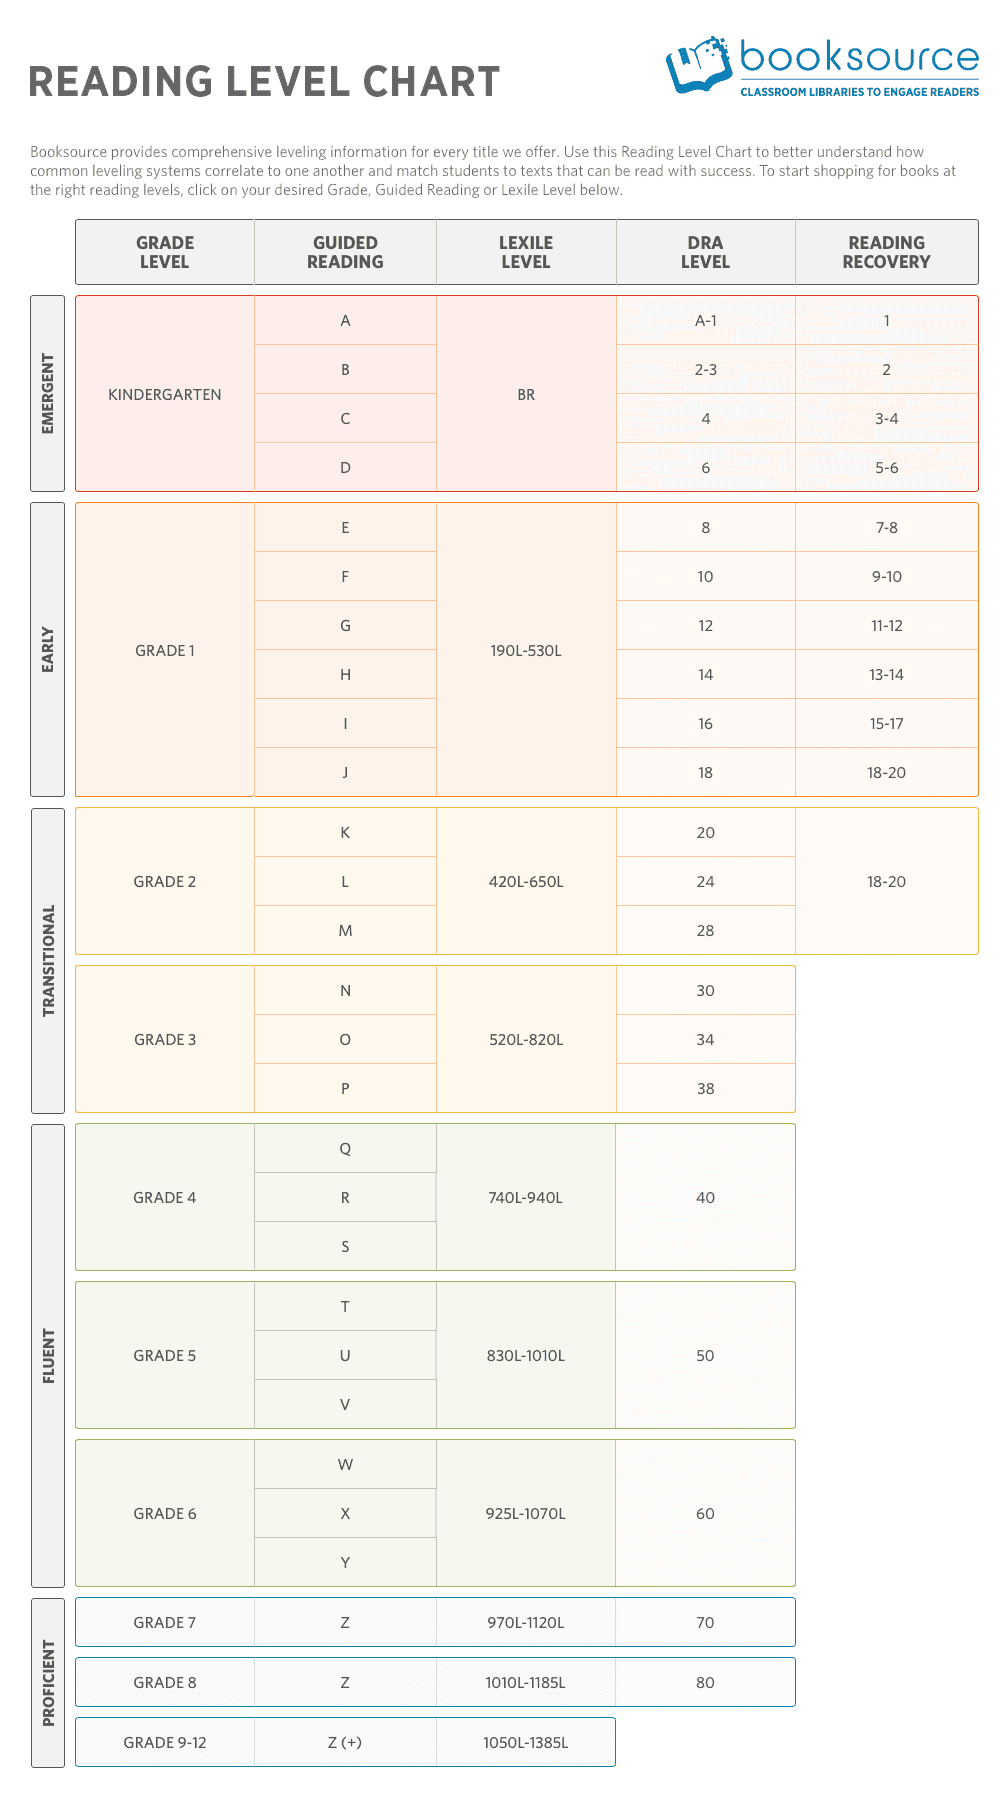 Booksource Reading Level Correlation Chart - Booksource